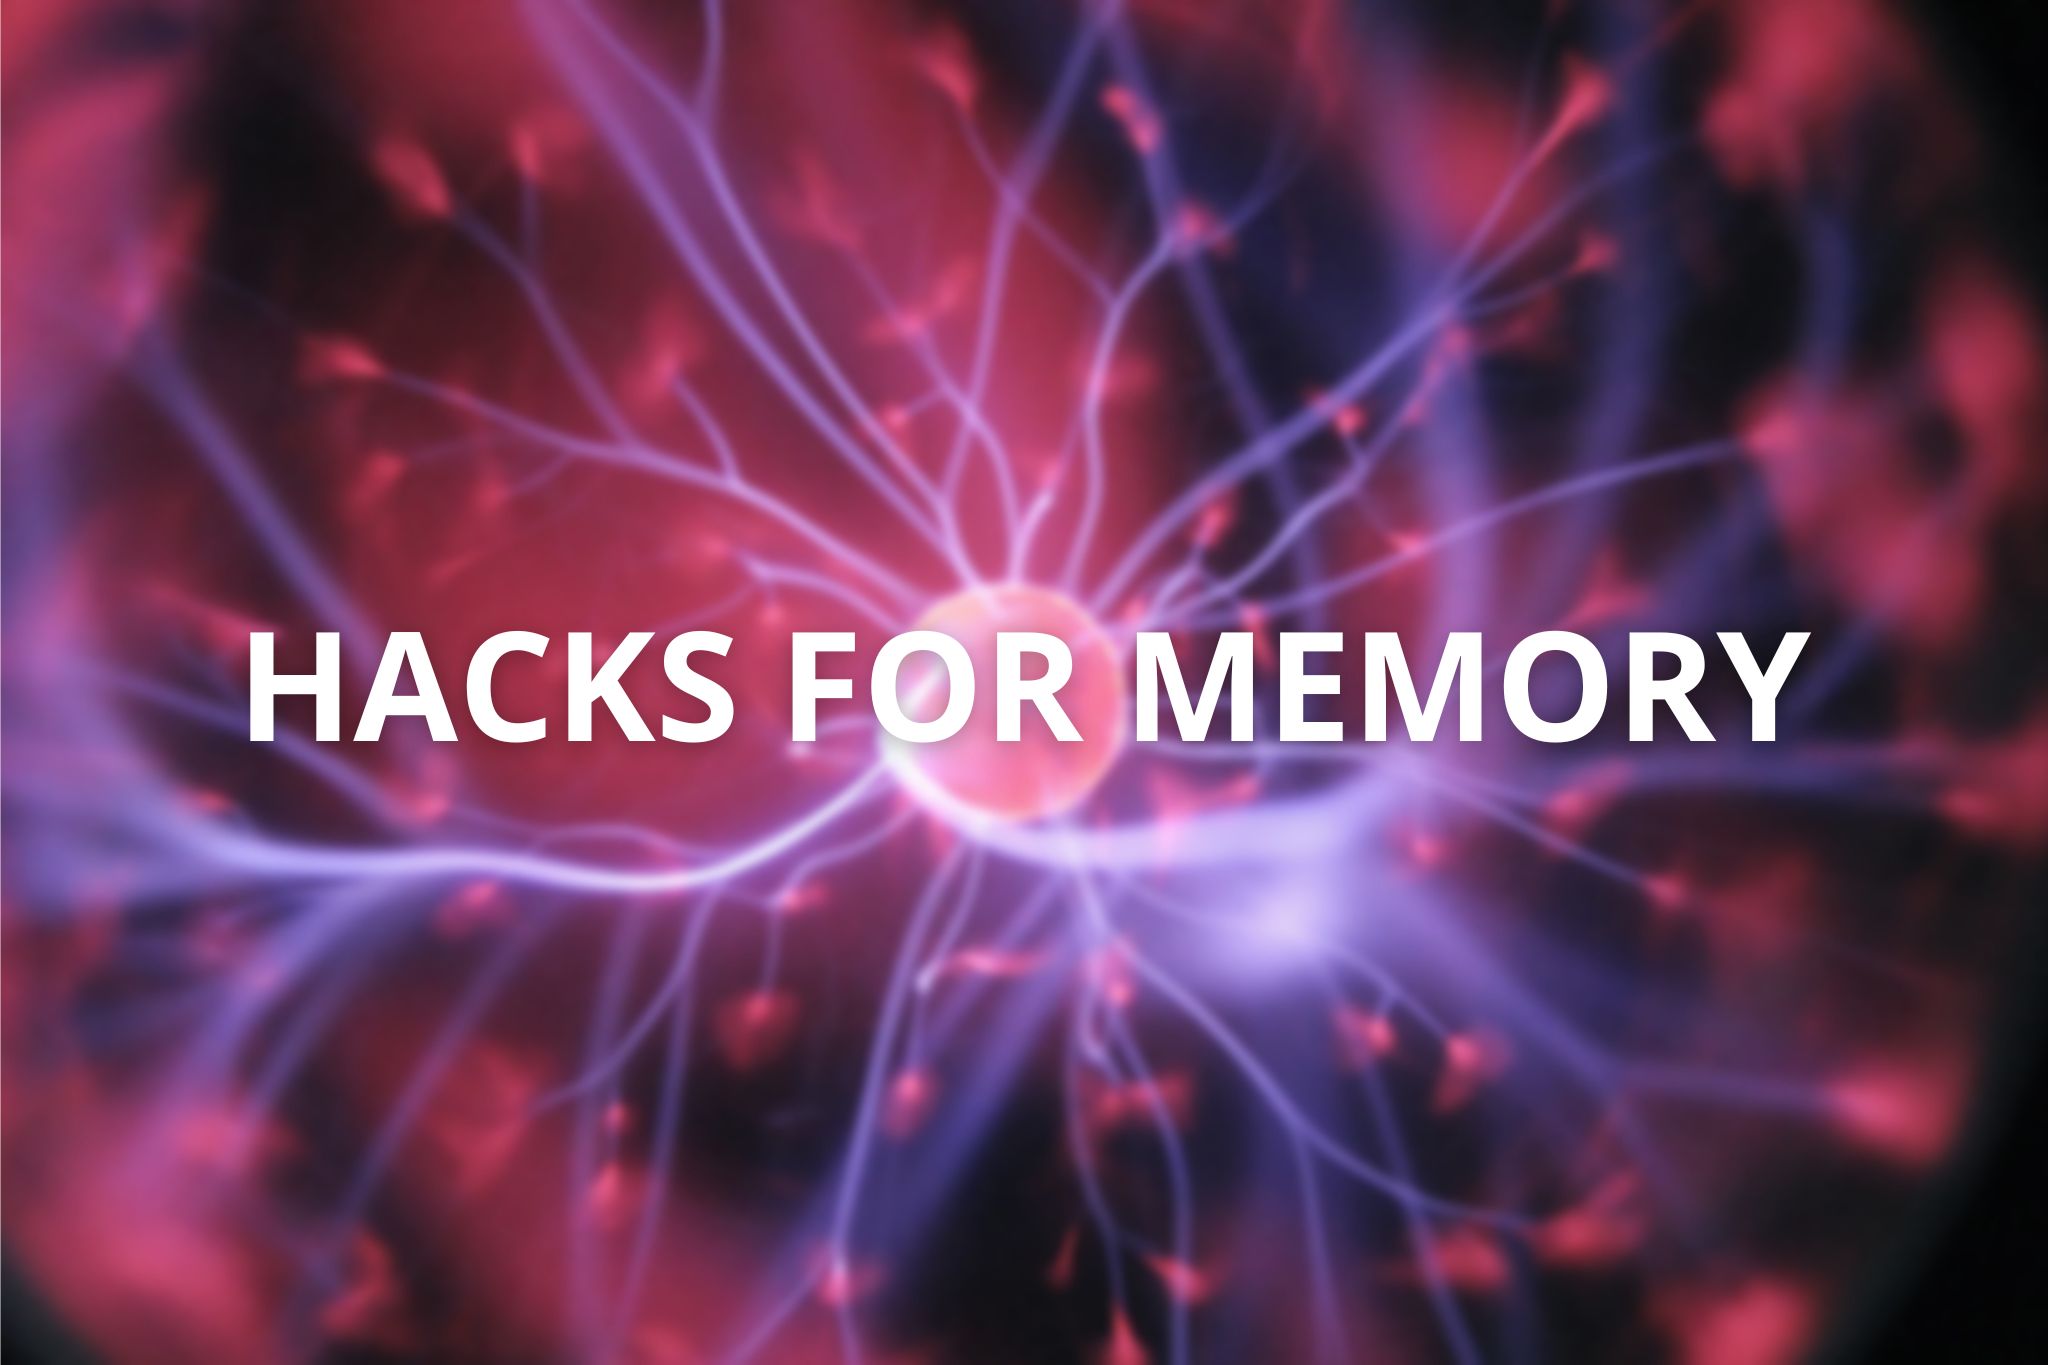 Study hacks for memory